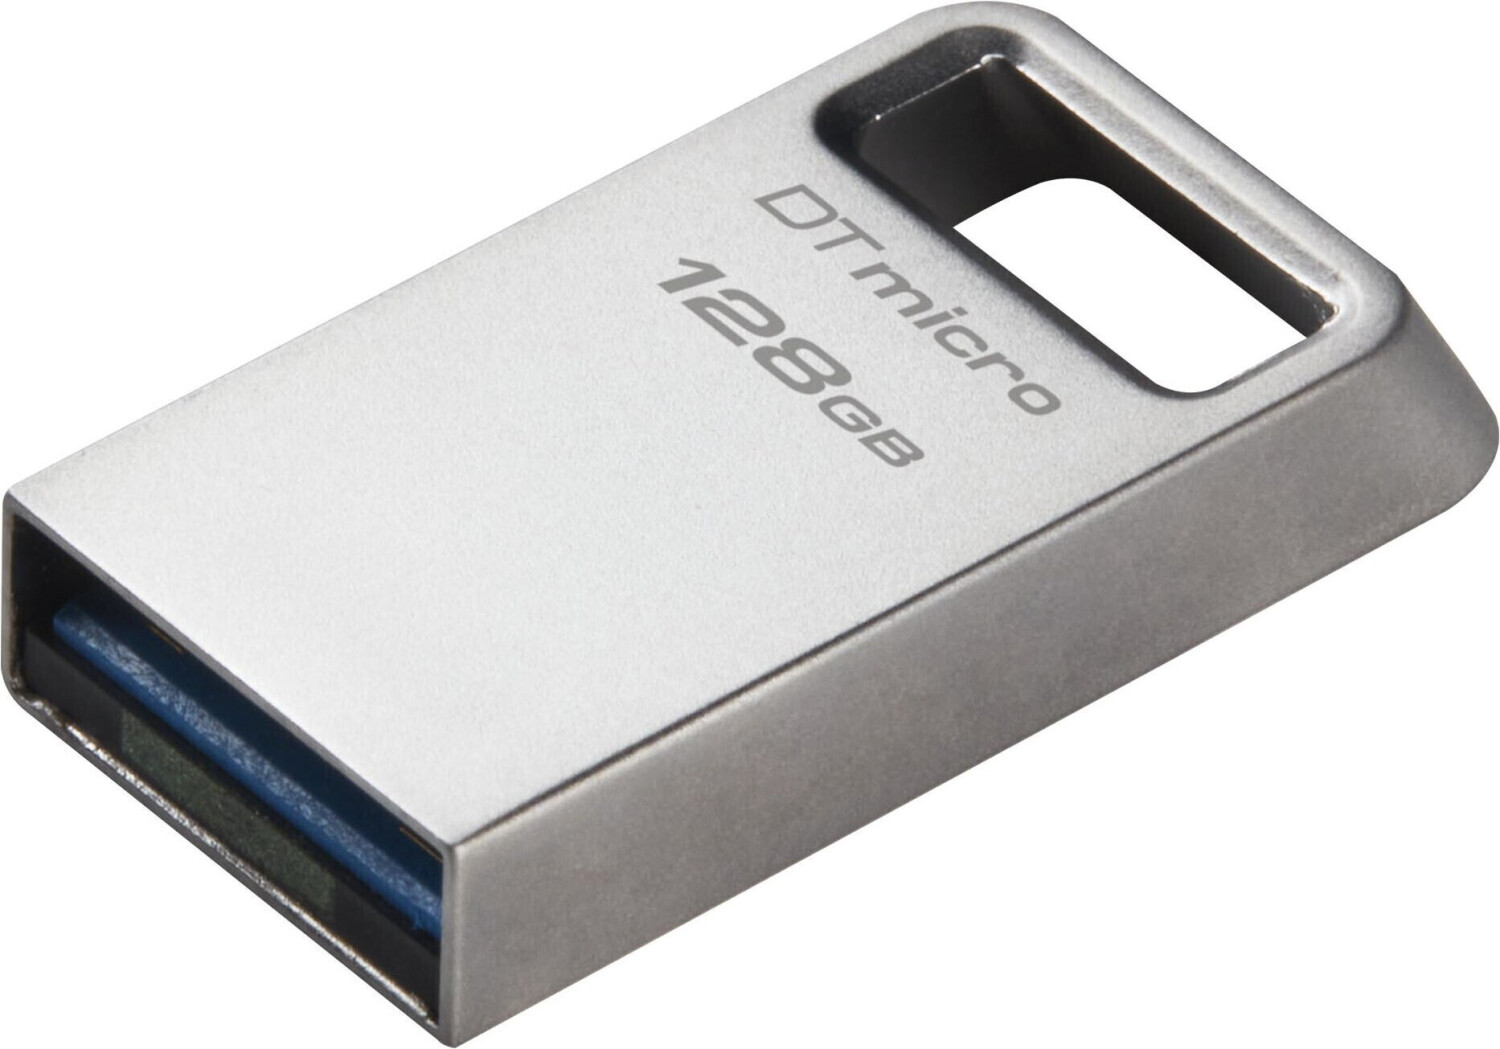 Kingston Cle USB Type-C 32 GB USB 3.2 à prix pas cher